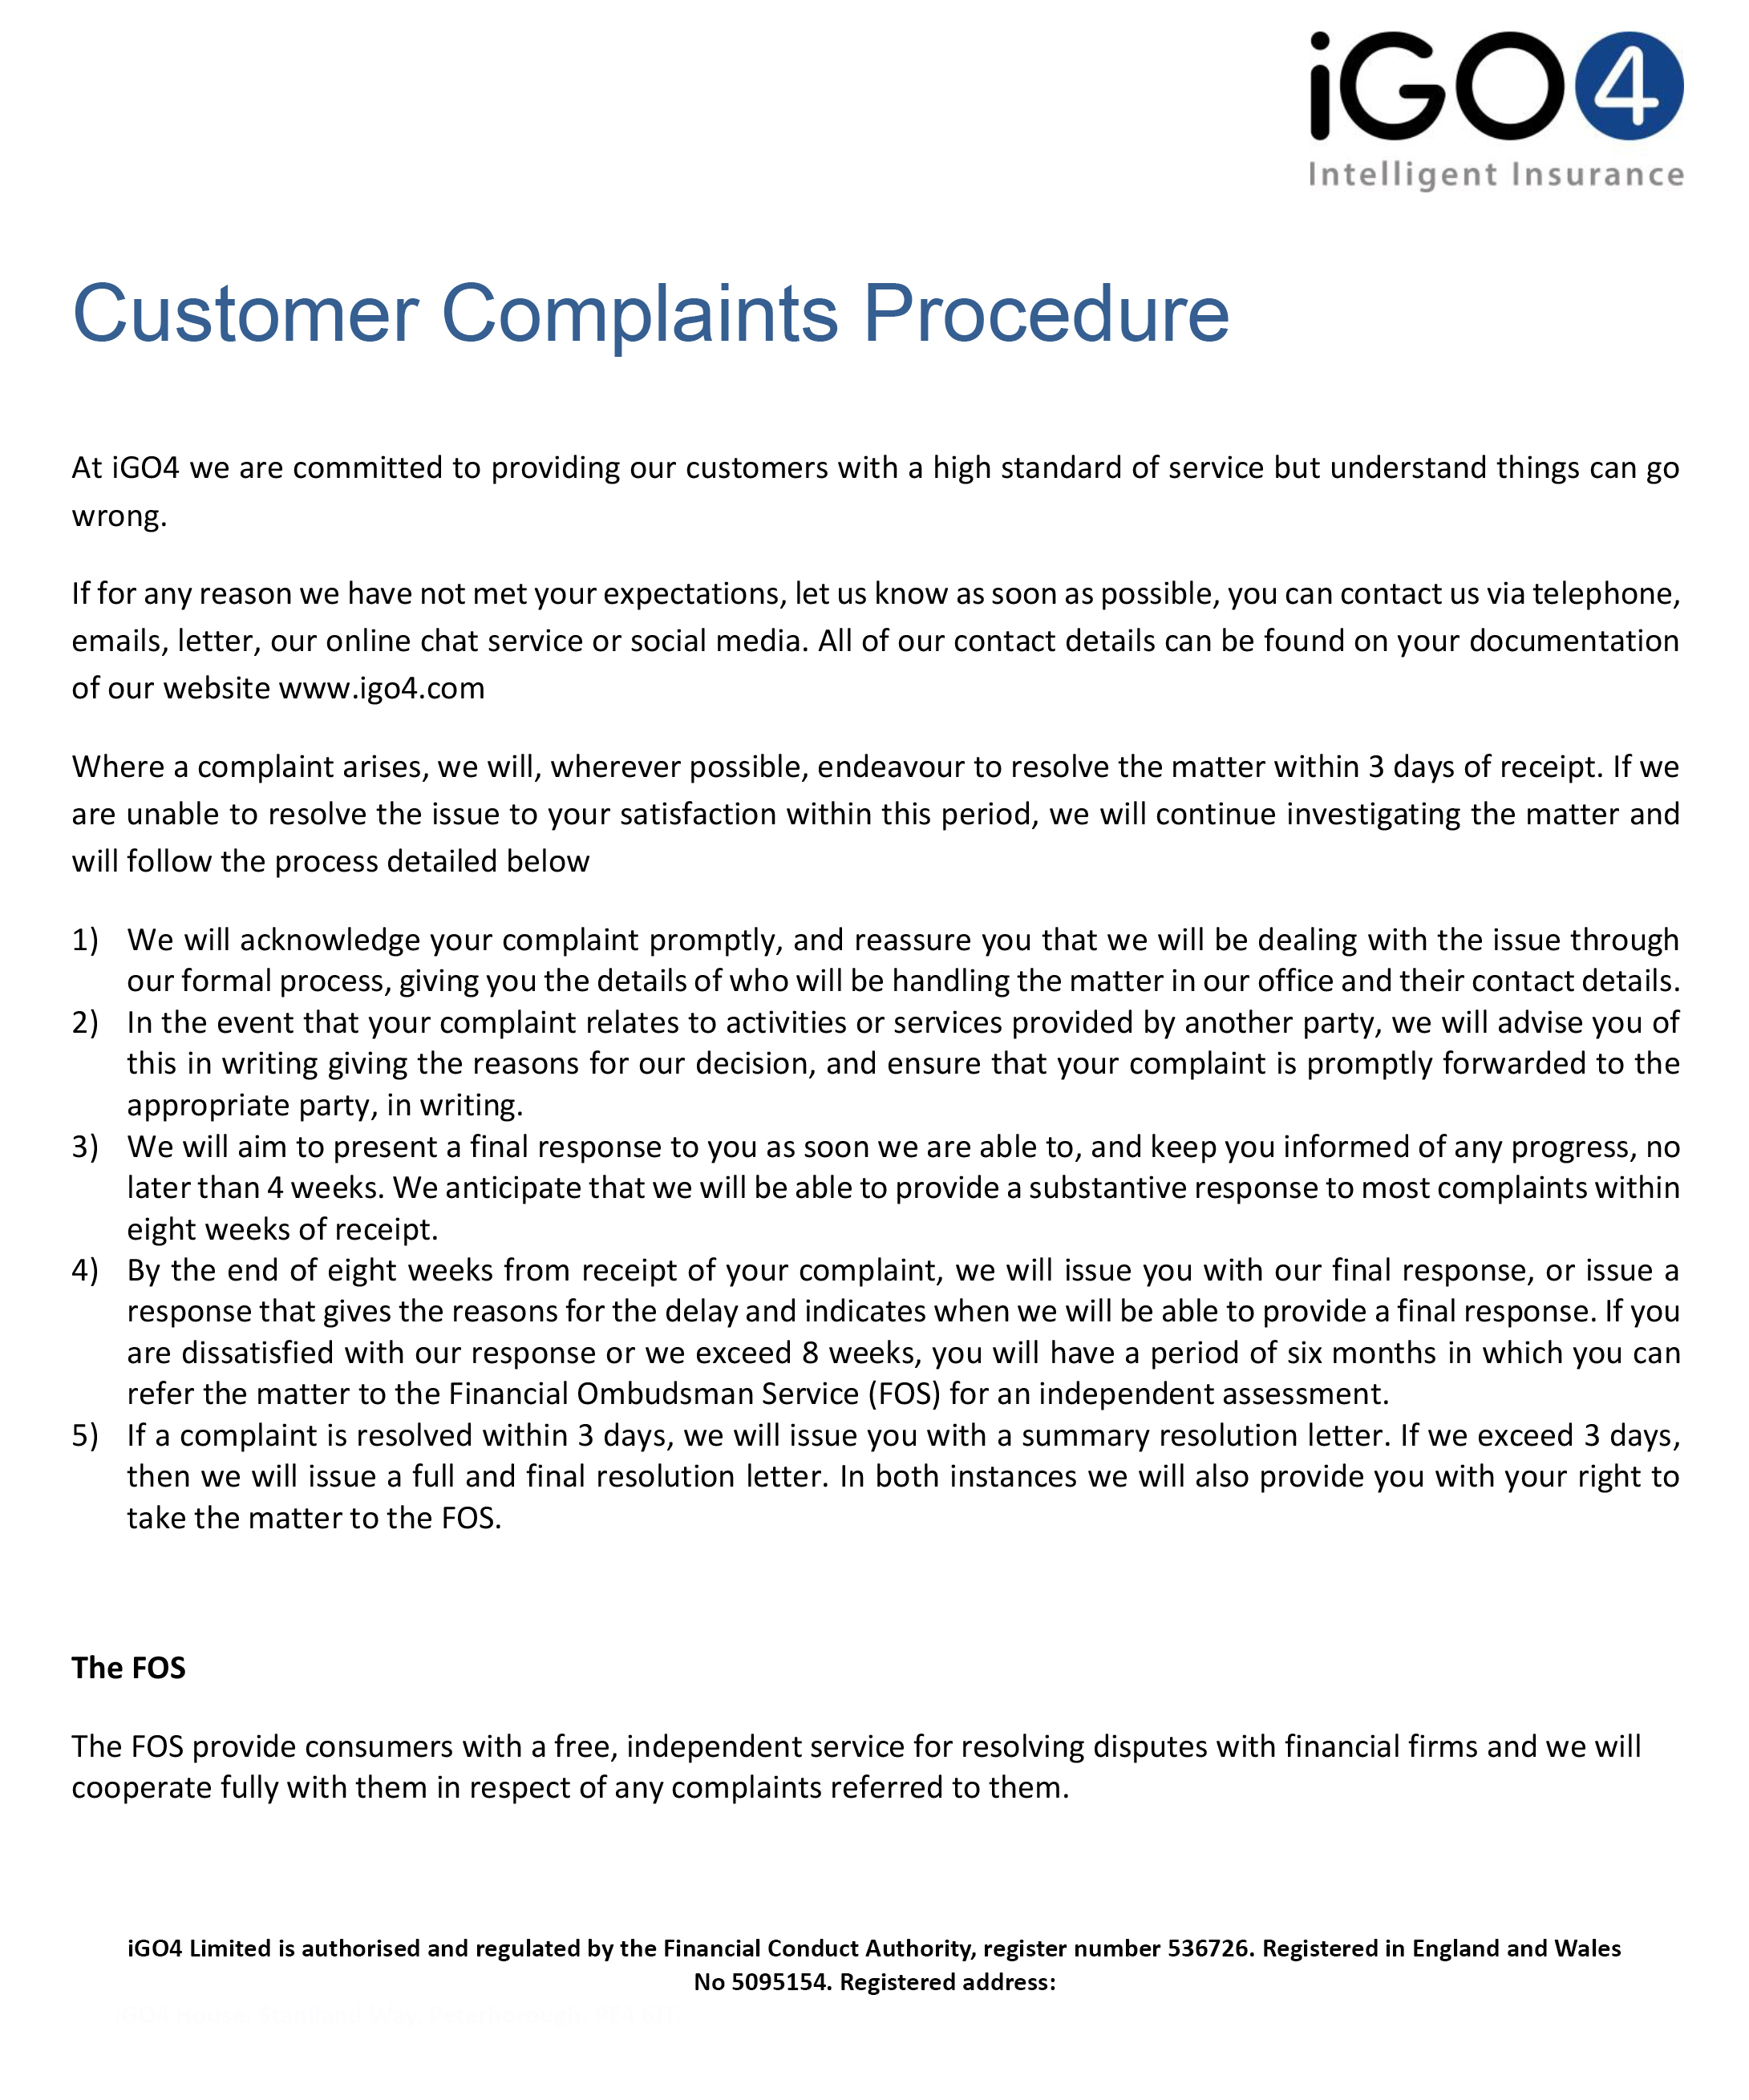 IGO4_Complaint_procedure.jpg